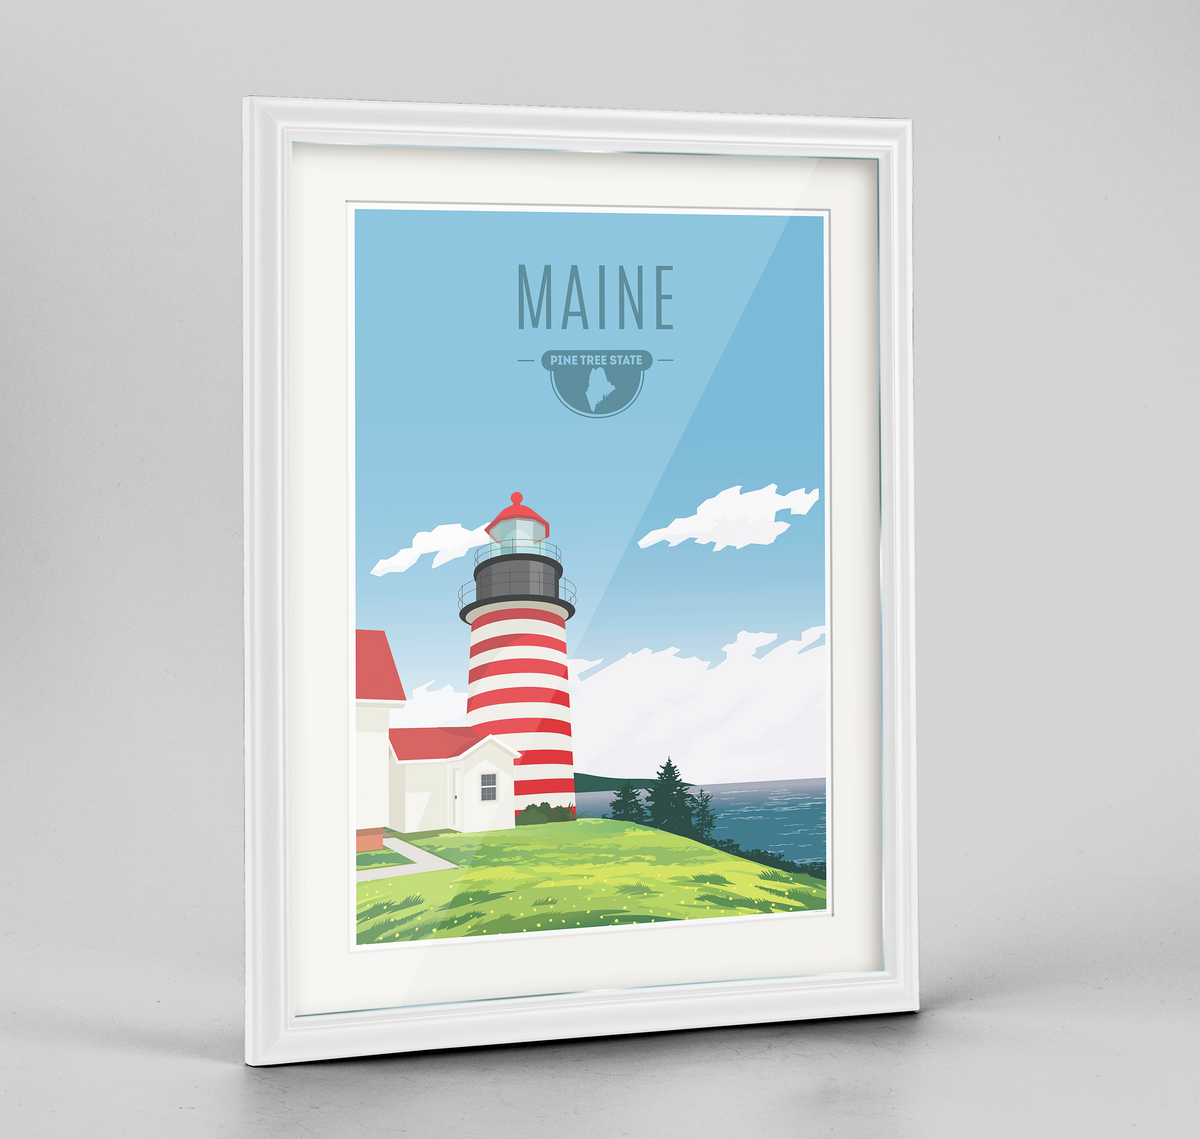 Maine State Frame Print